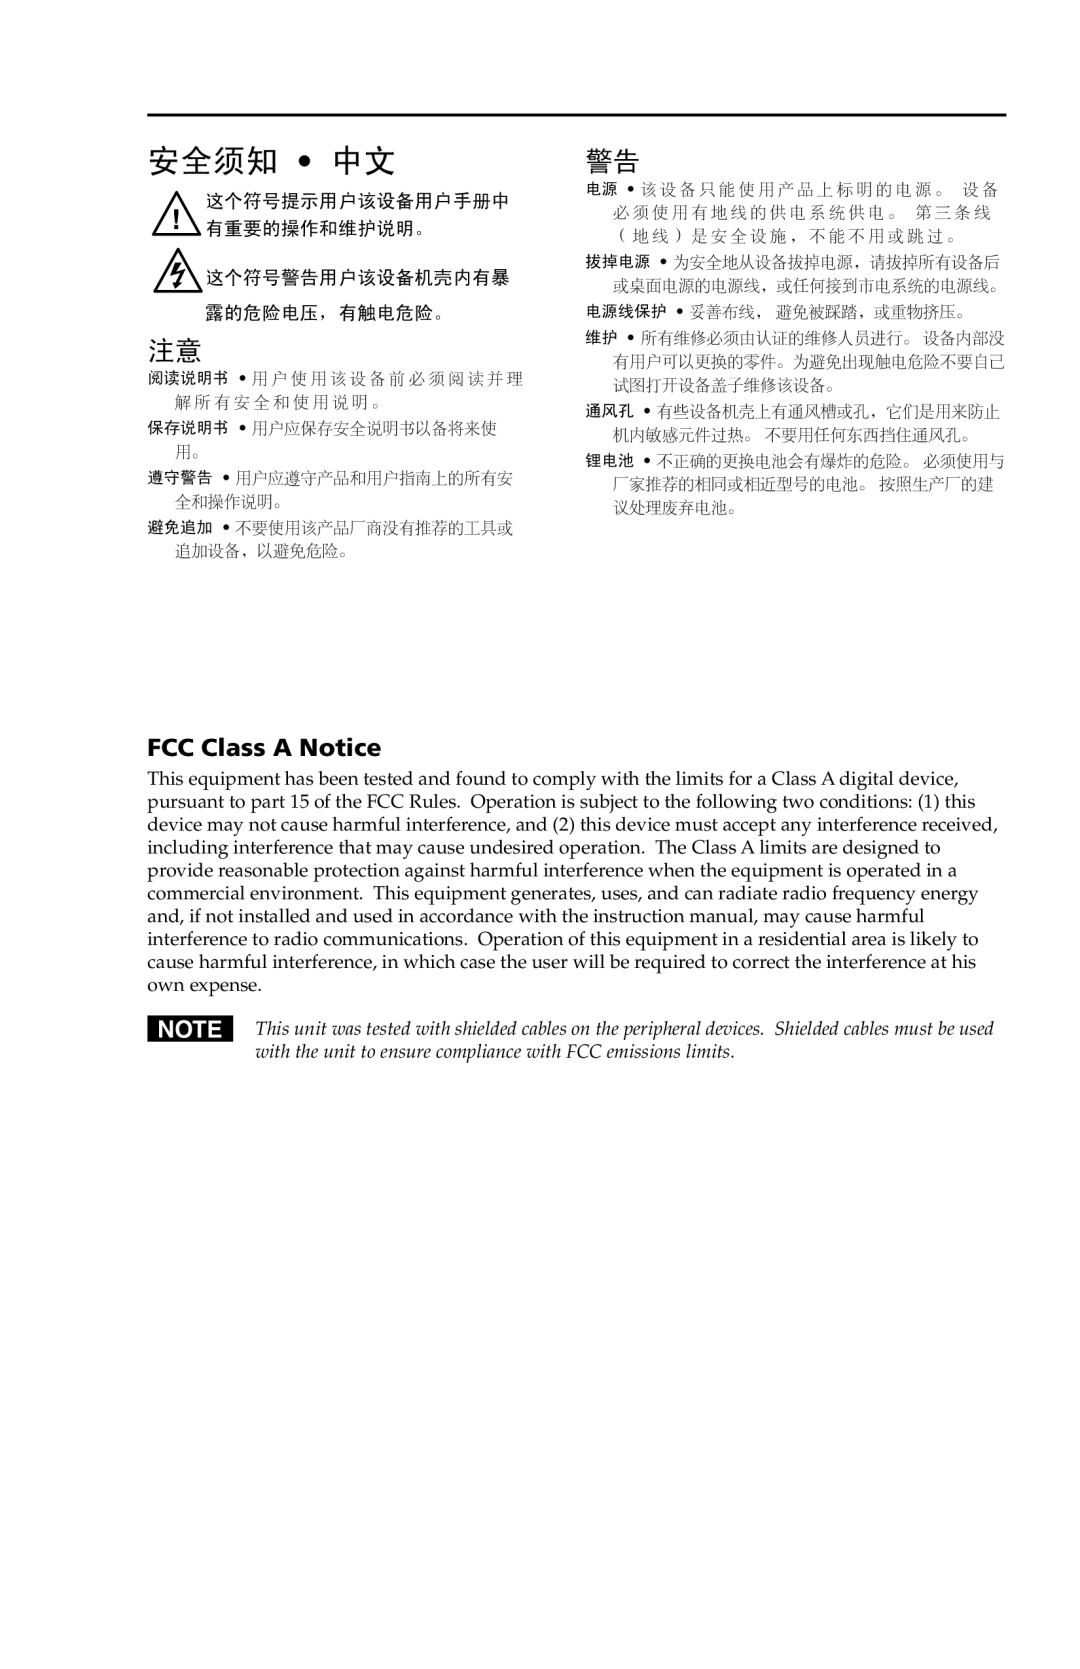 Extron electronic HDMI 201 Tx/Rx user manual FCC Class A Notice, 安全须知 中文 